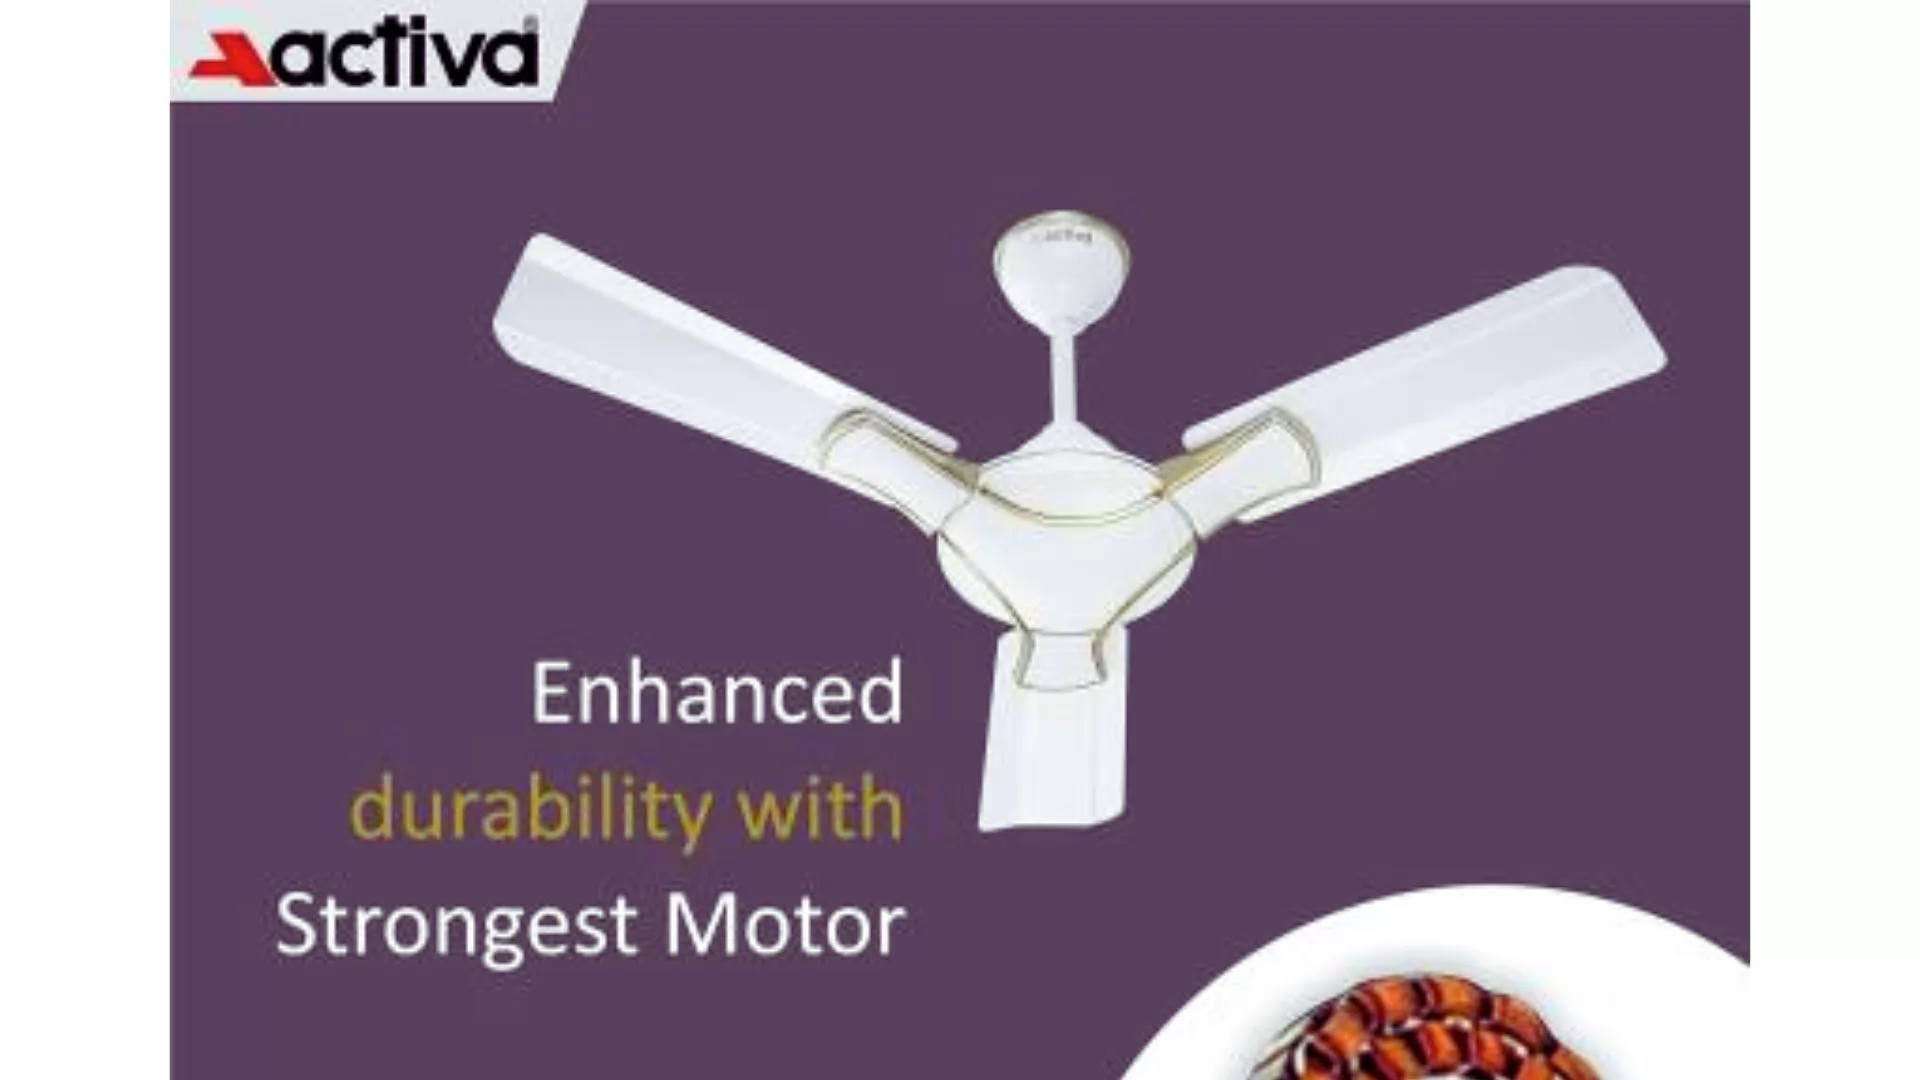 Activa Corolla ceiling fan